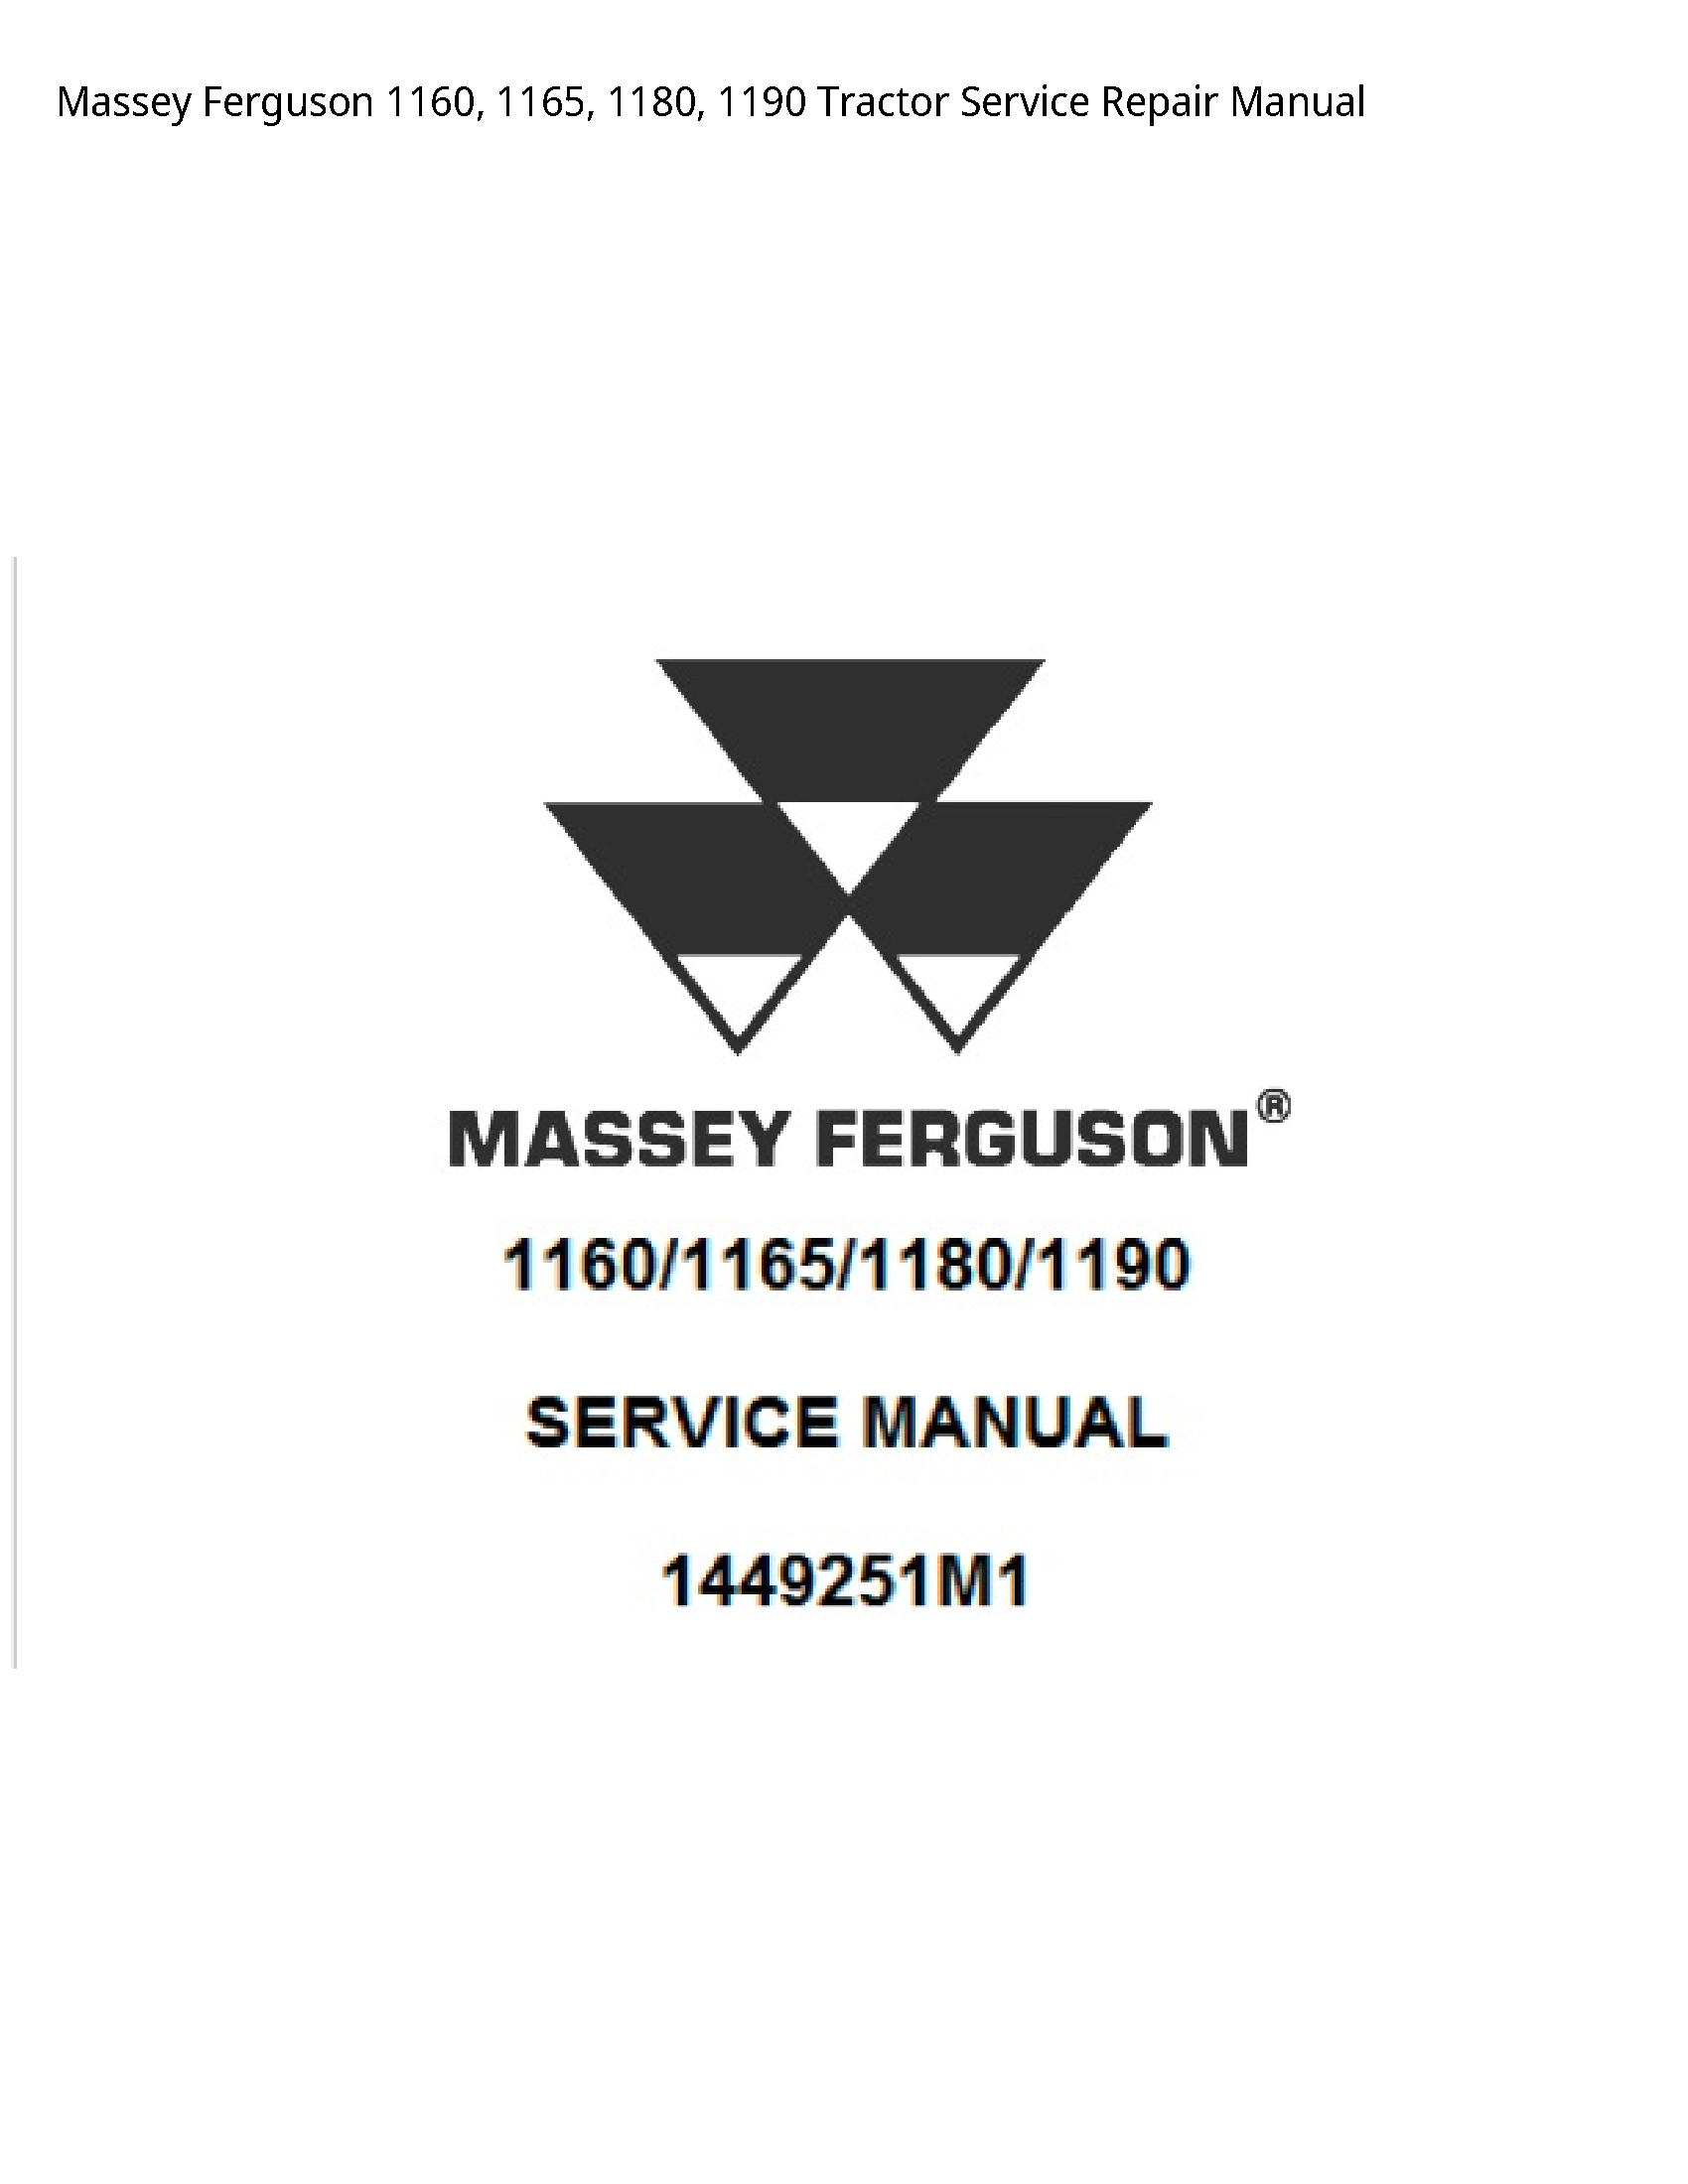 Massey Ferguson 1160 Tractor manual